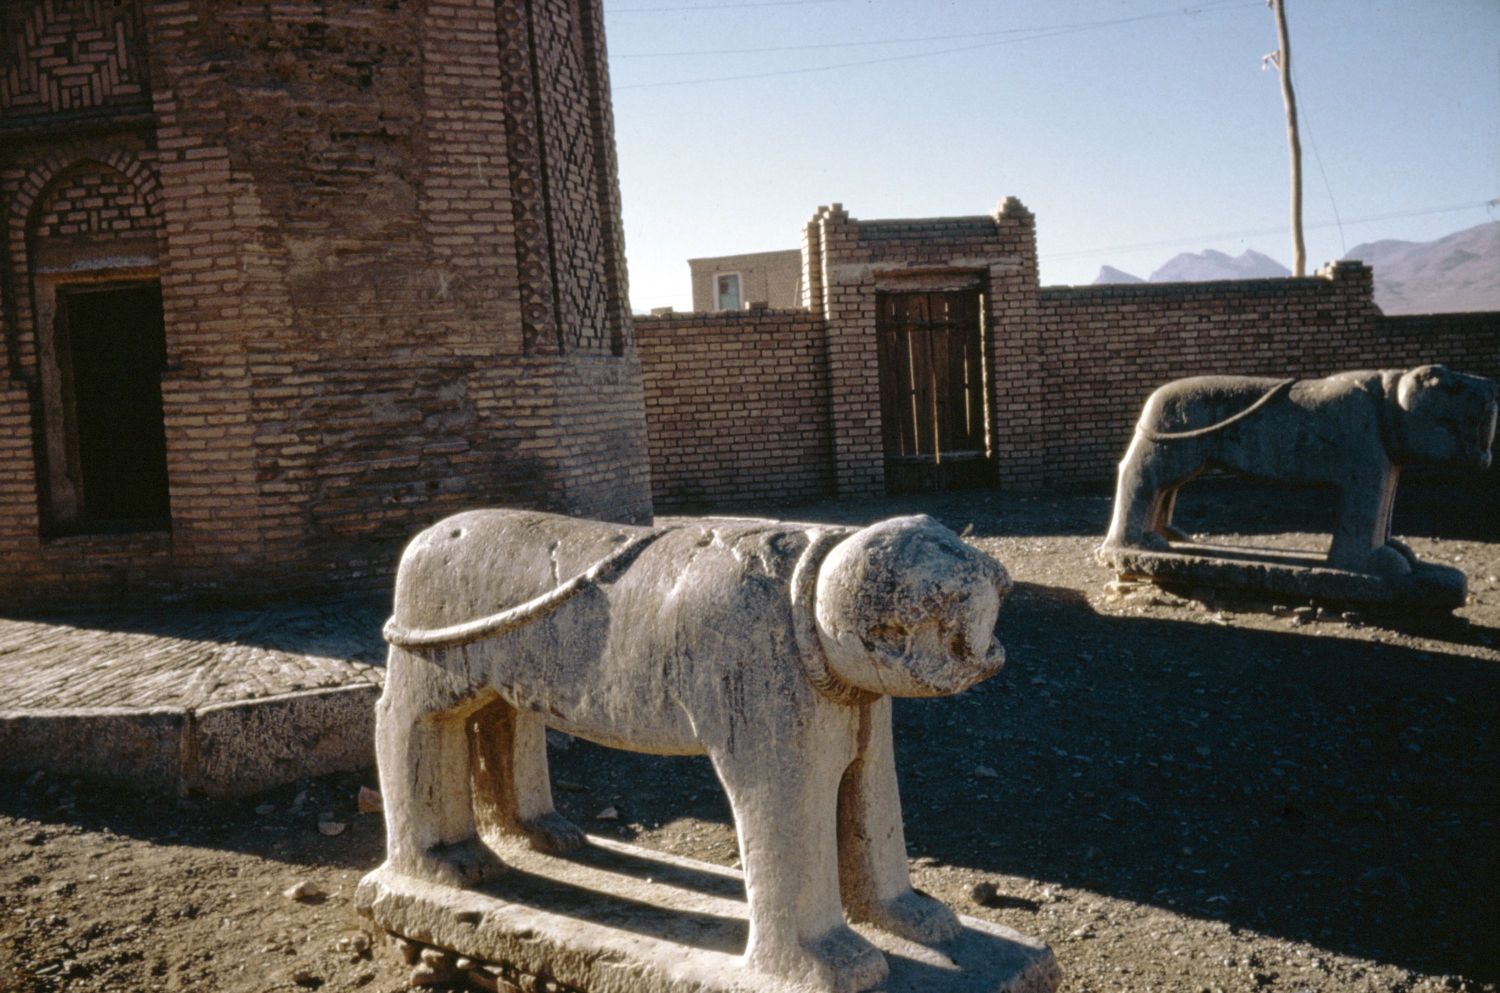 Stone lion sculpture at the base of a minaret in Gulpayagan, Iran.